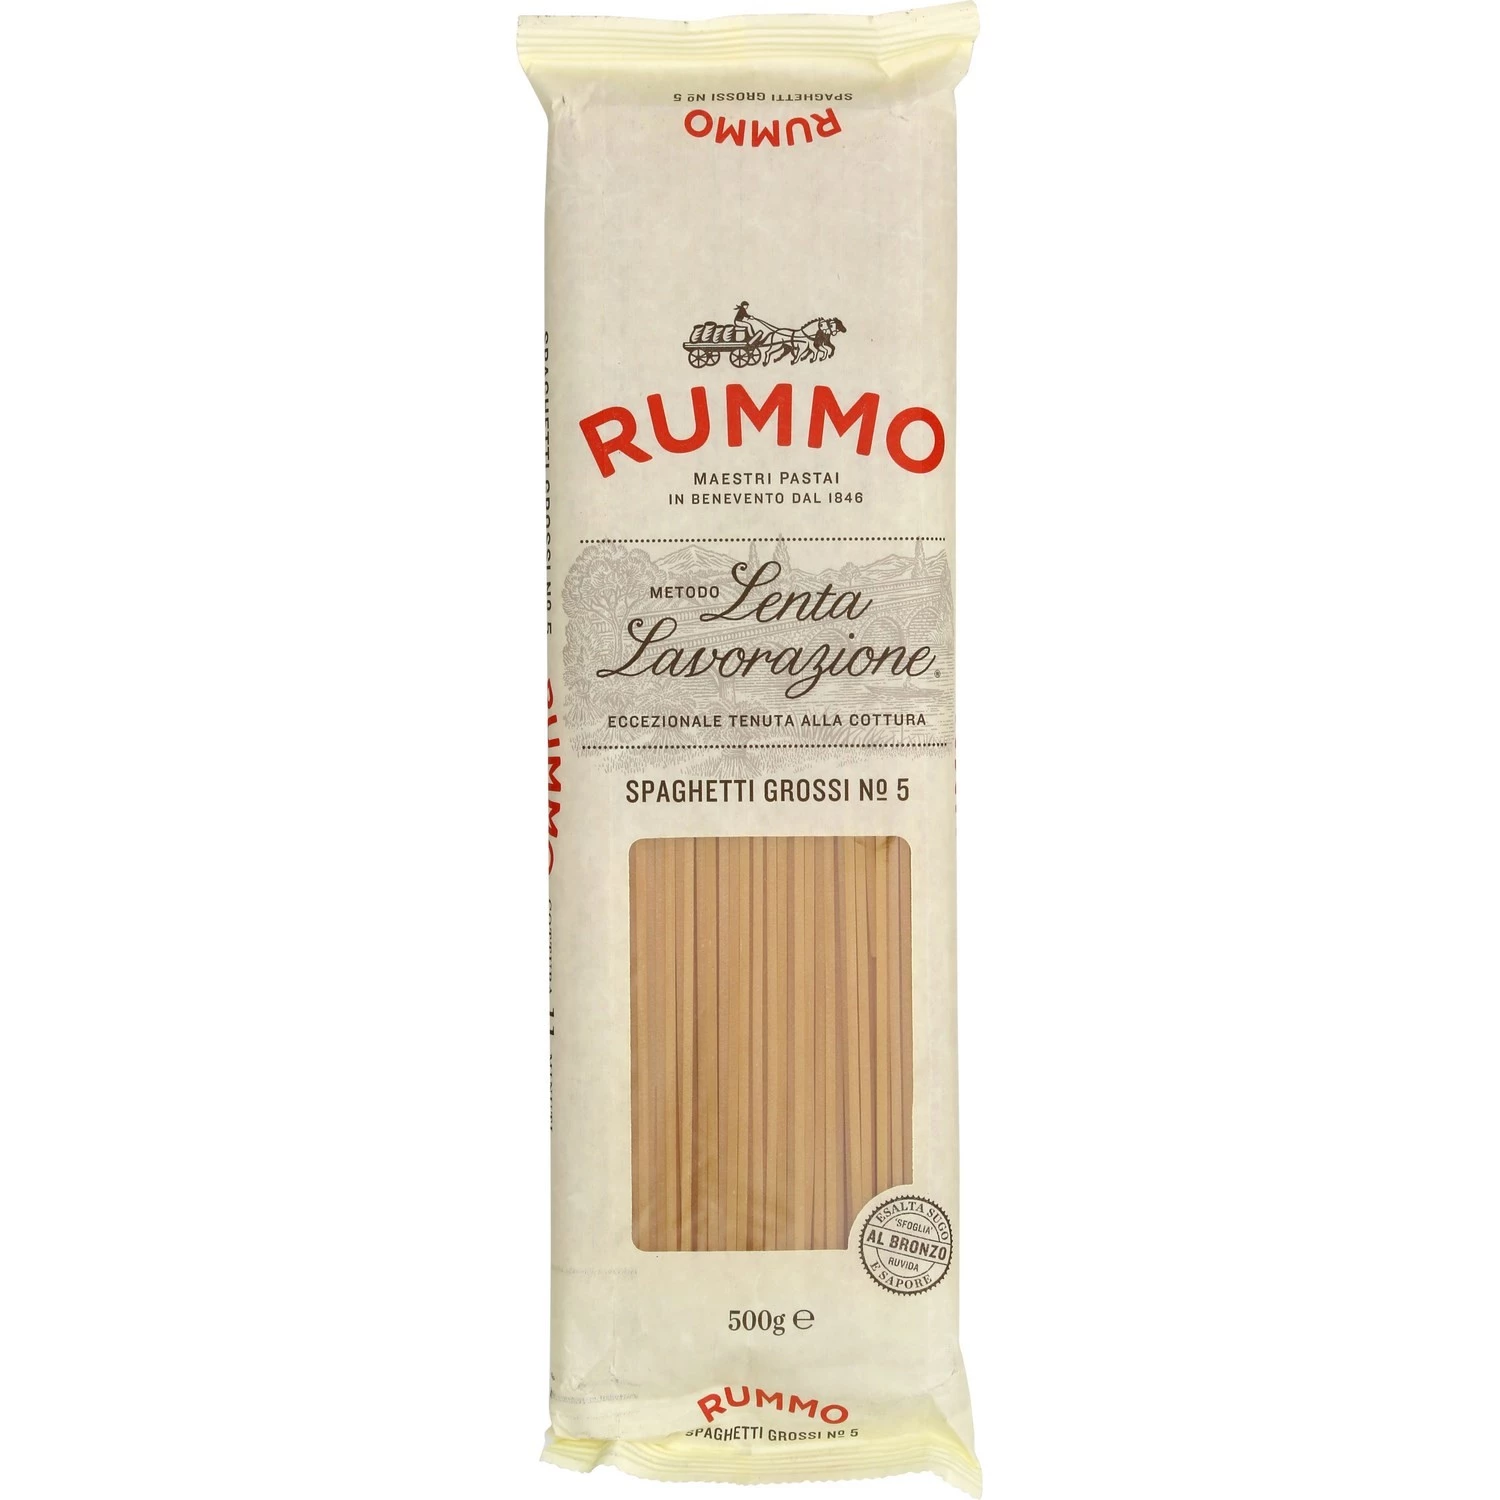 Grossi Spaghetti 5 号意大利面，500g - RUMMO